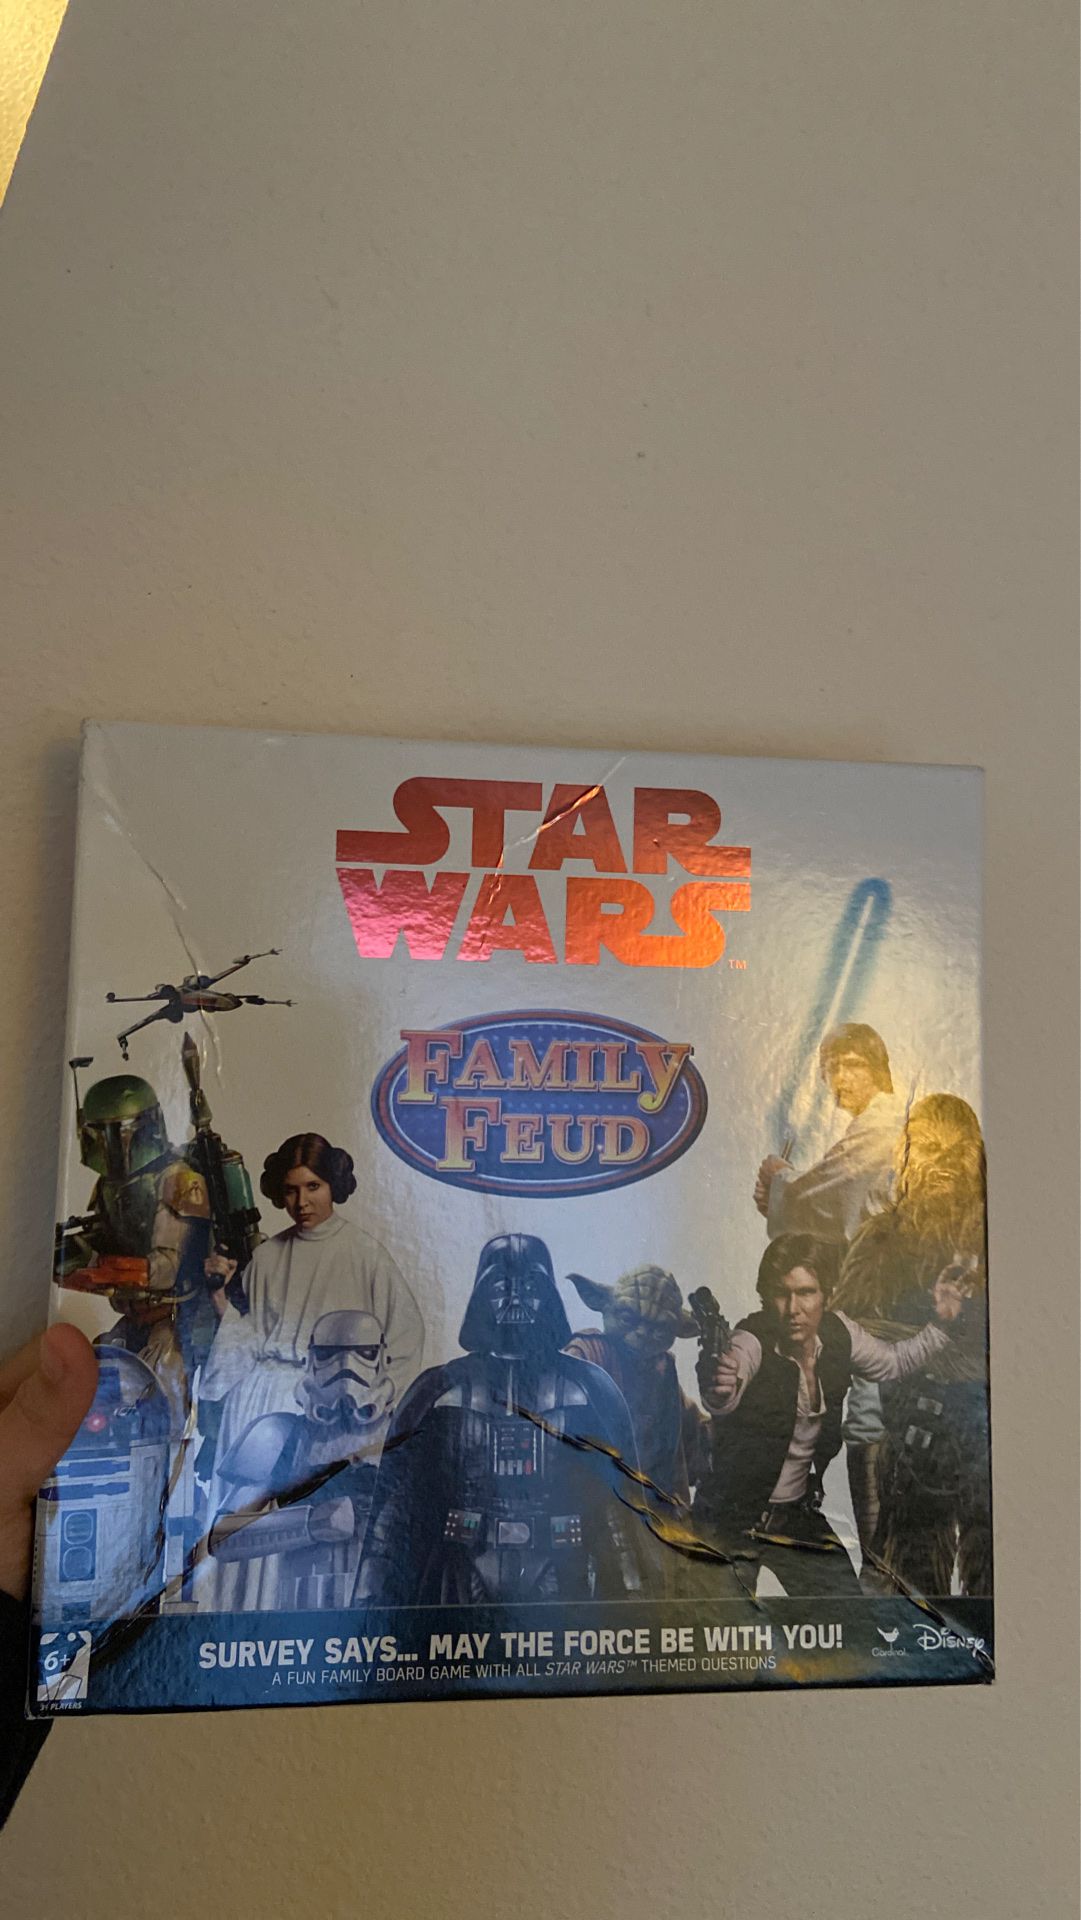 Star Wars family feud board game